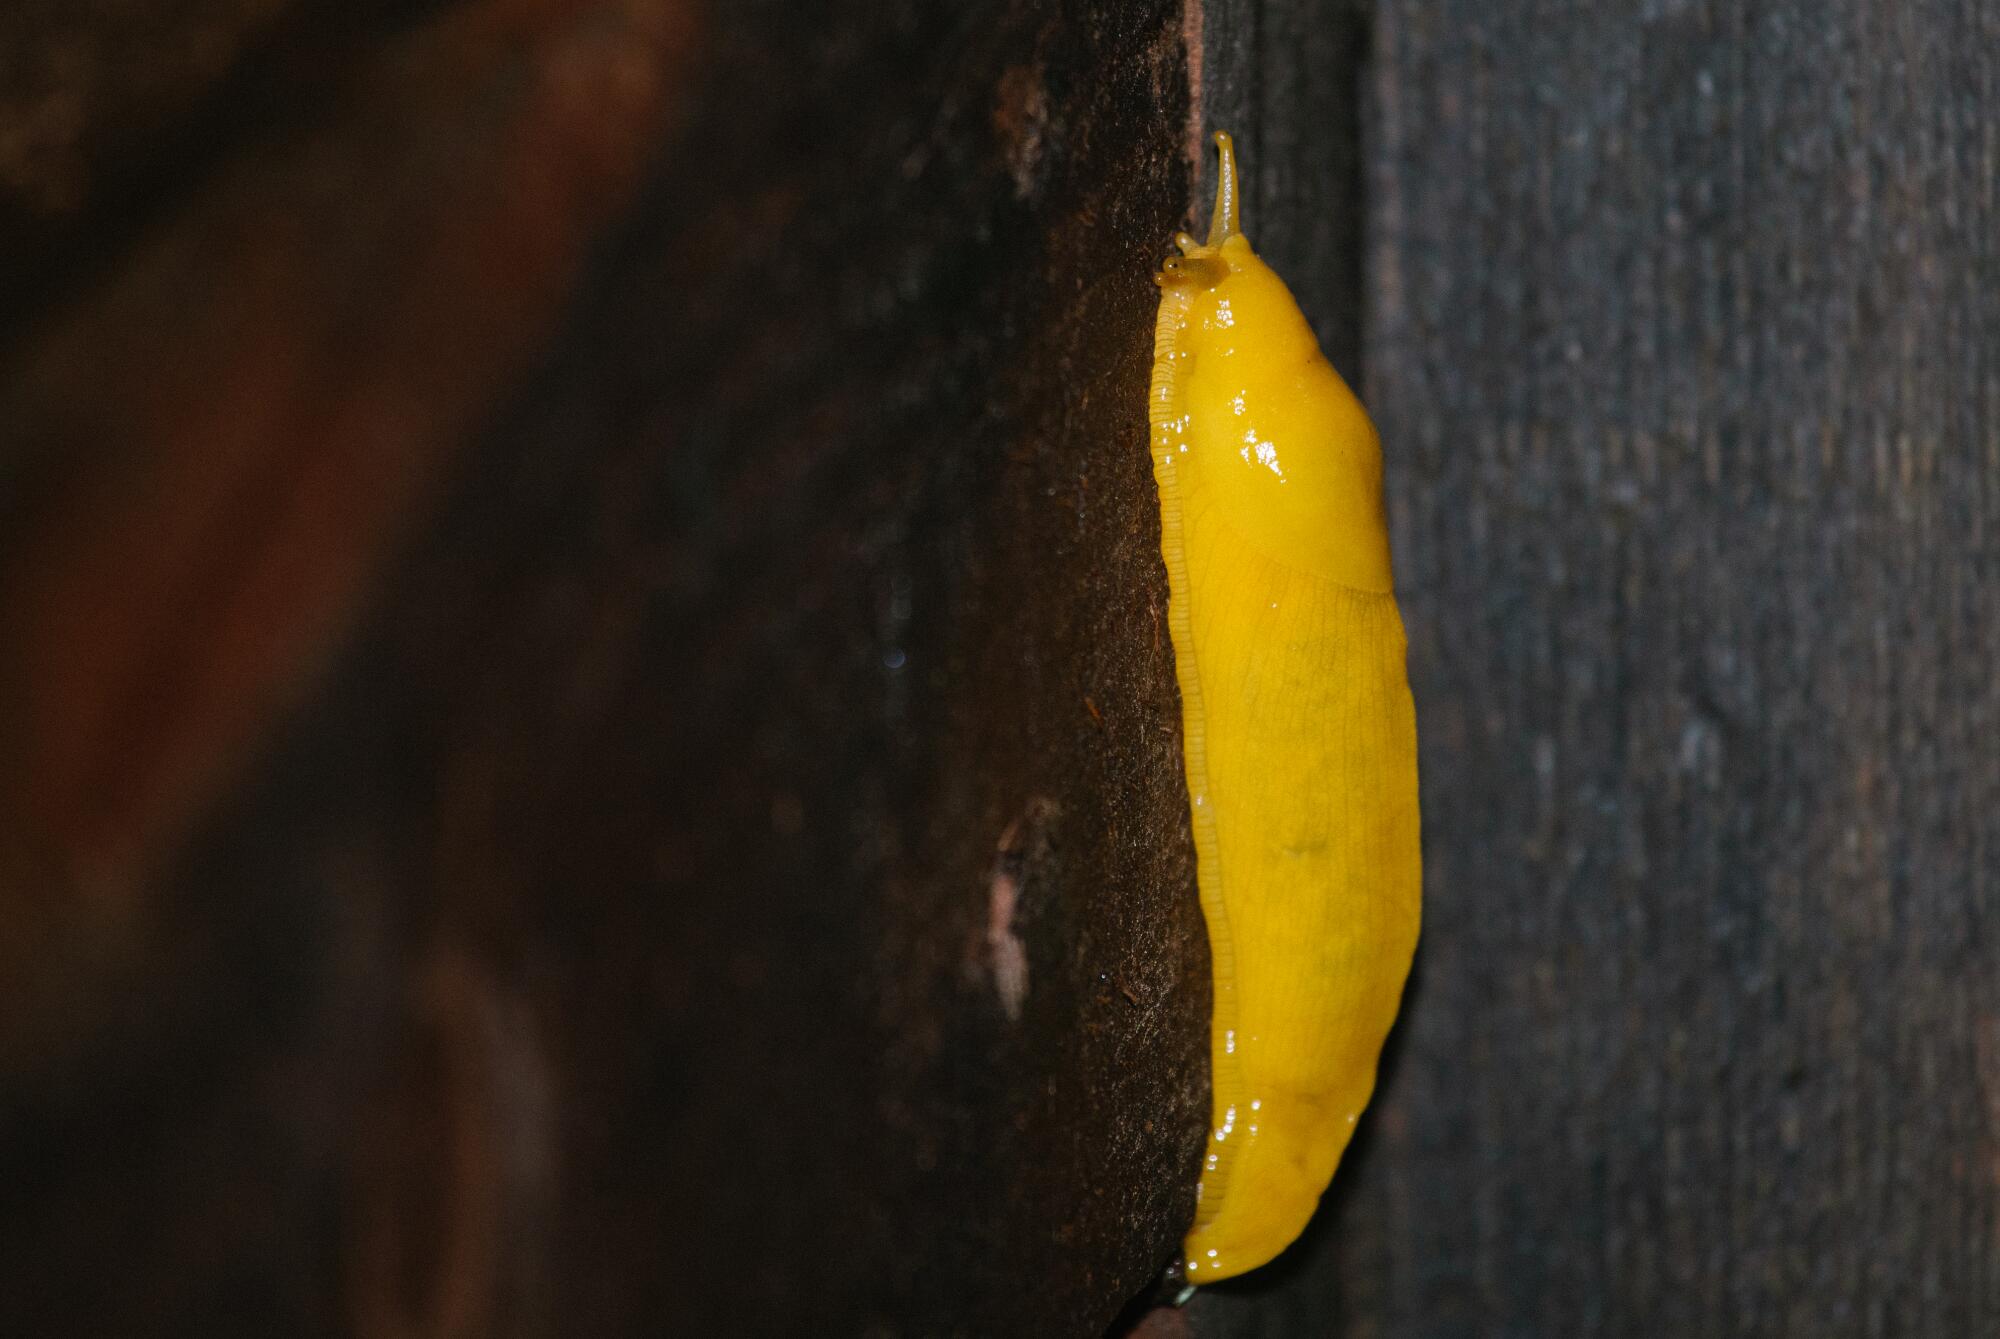 A banana slug clings to a railing.